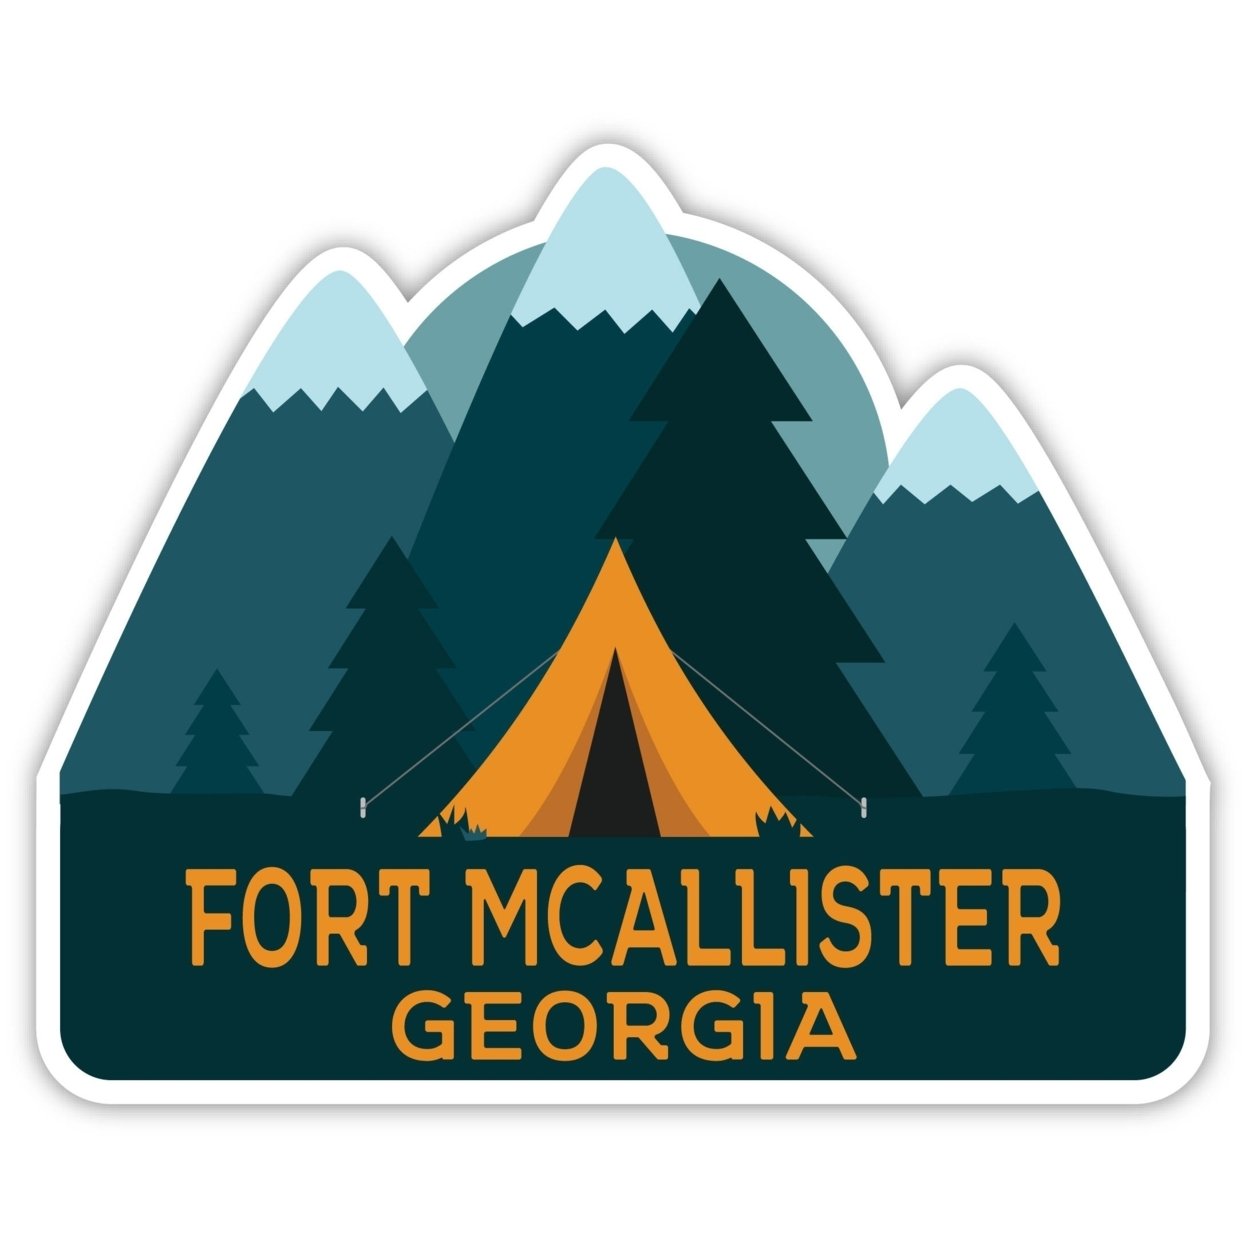 Fort McAllister Georgia Souvenir Decorative Stickers (Choose Theme And Size) - Single Unit, 8-Inch, Tent